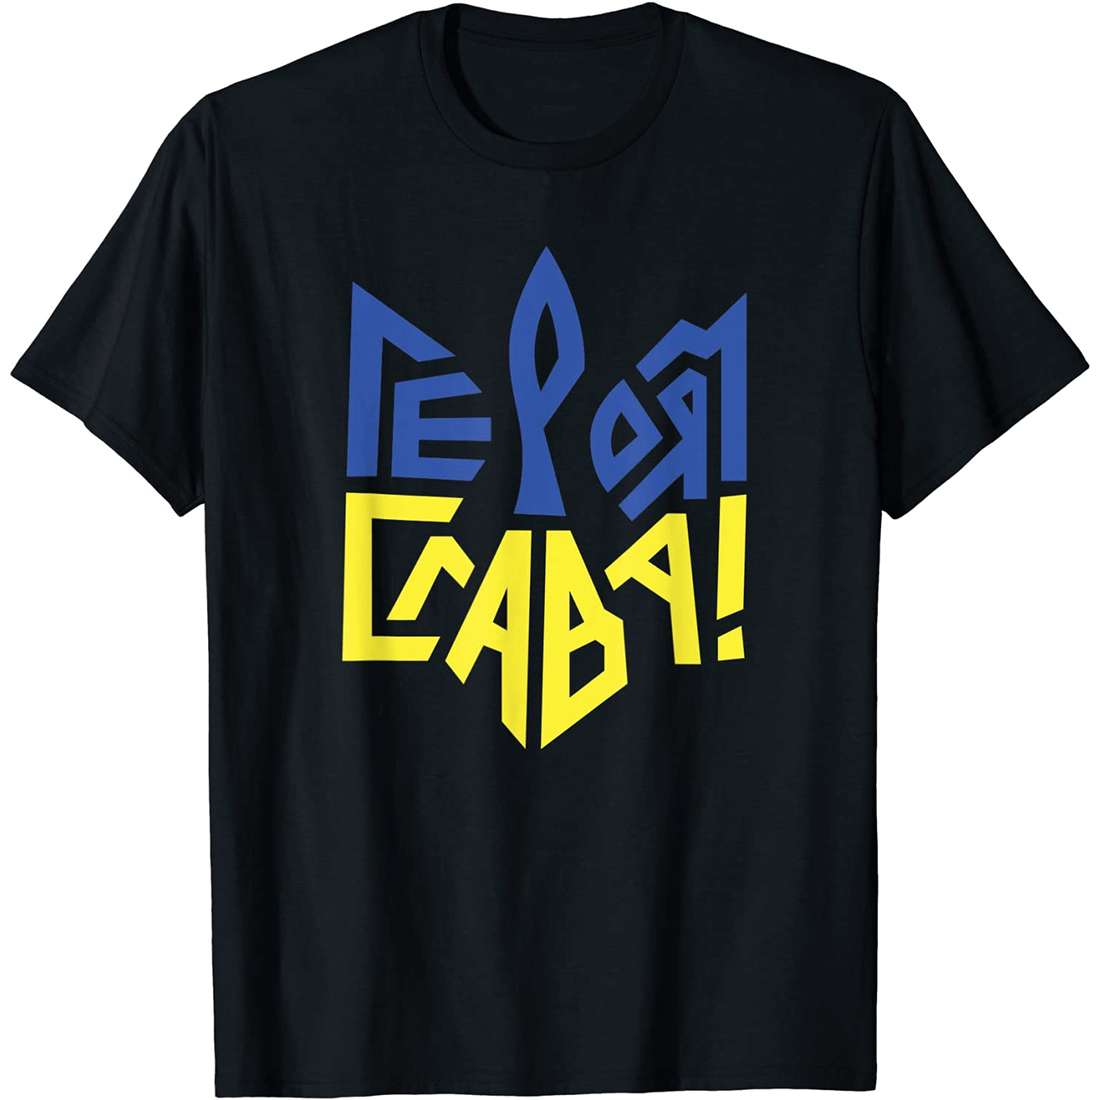 Ukrainian Symbols Print Cotton T-Shirt / Casual Short Sleeves Clothing for Men and Women